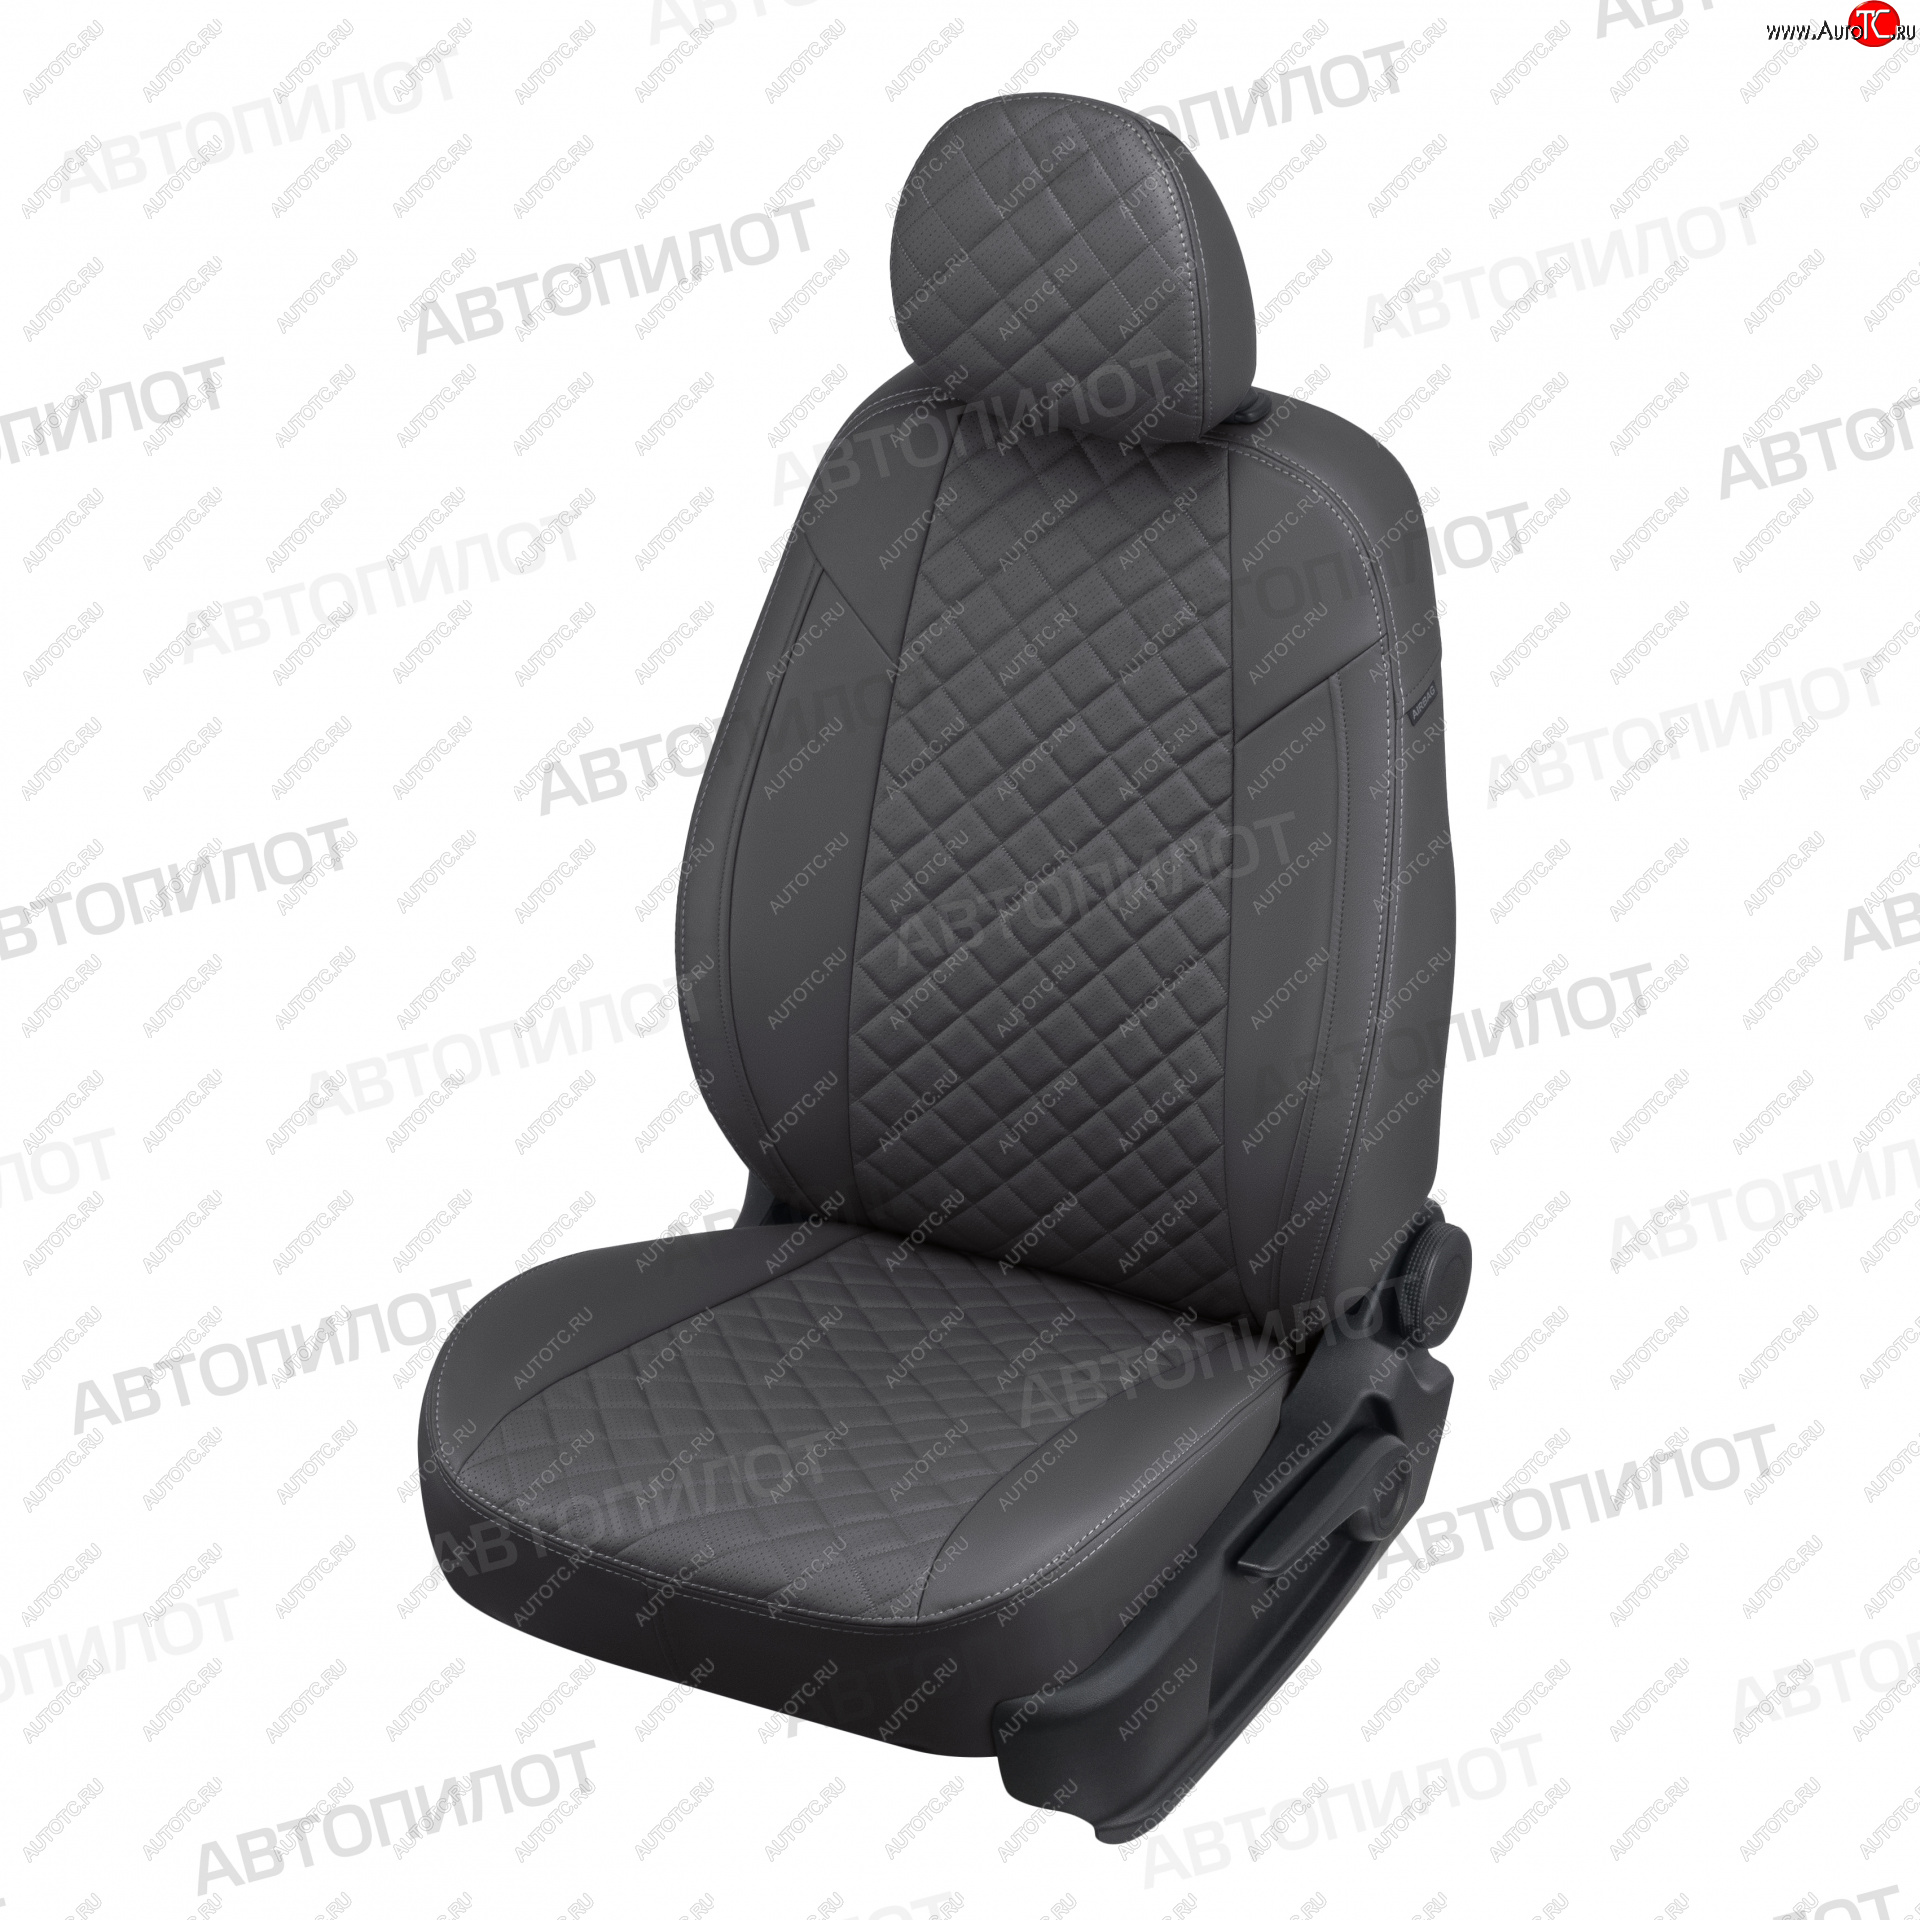 4 799 р. Чехлы сидений (3 места, экокожа) Автопилот Ромб  Ford Transit  3 (2006-2014) (темно-серый)